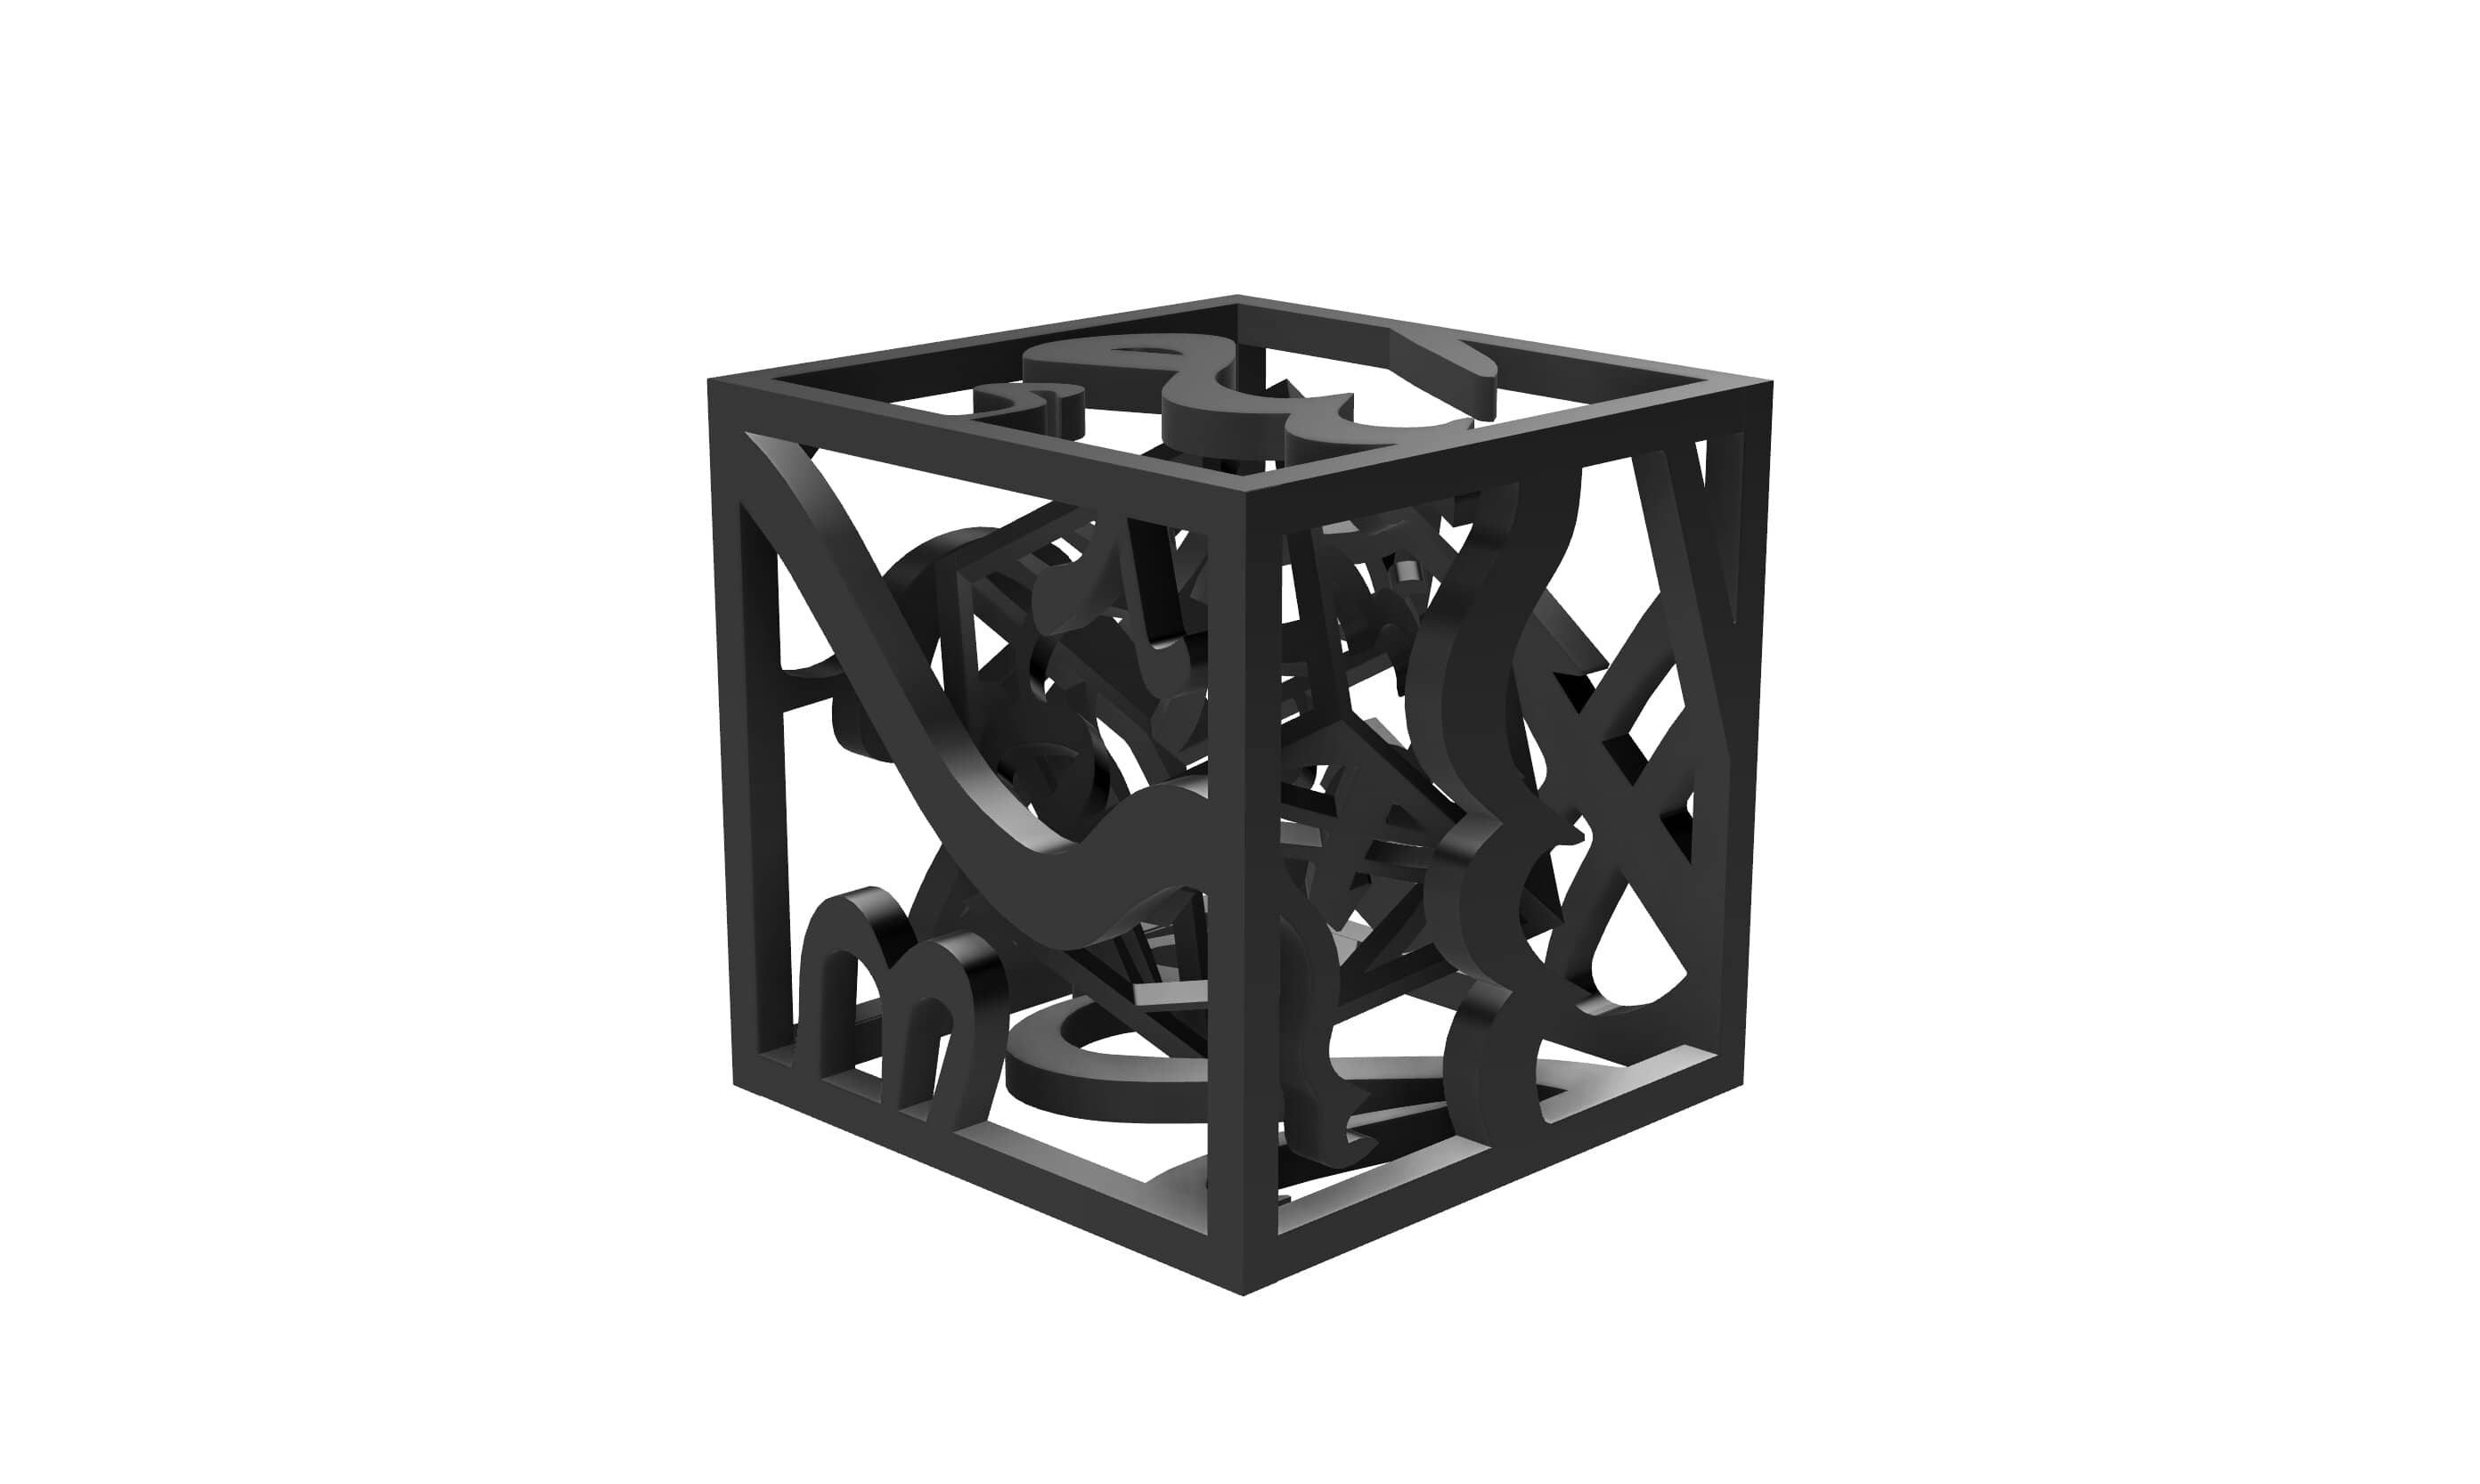 Final Render of the cubic design.